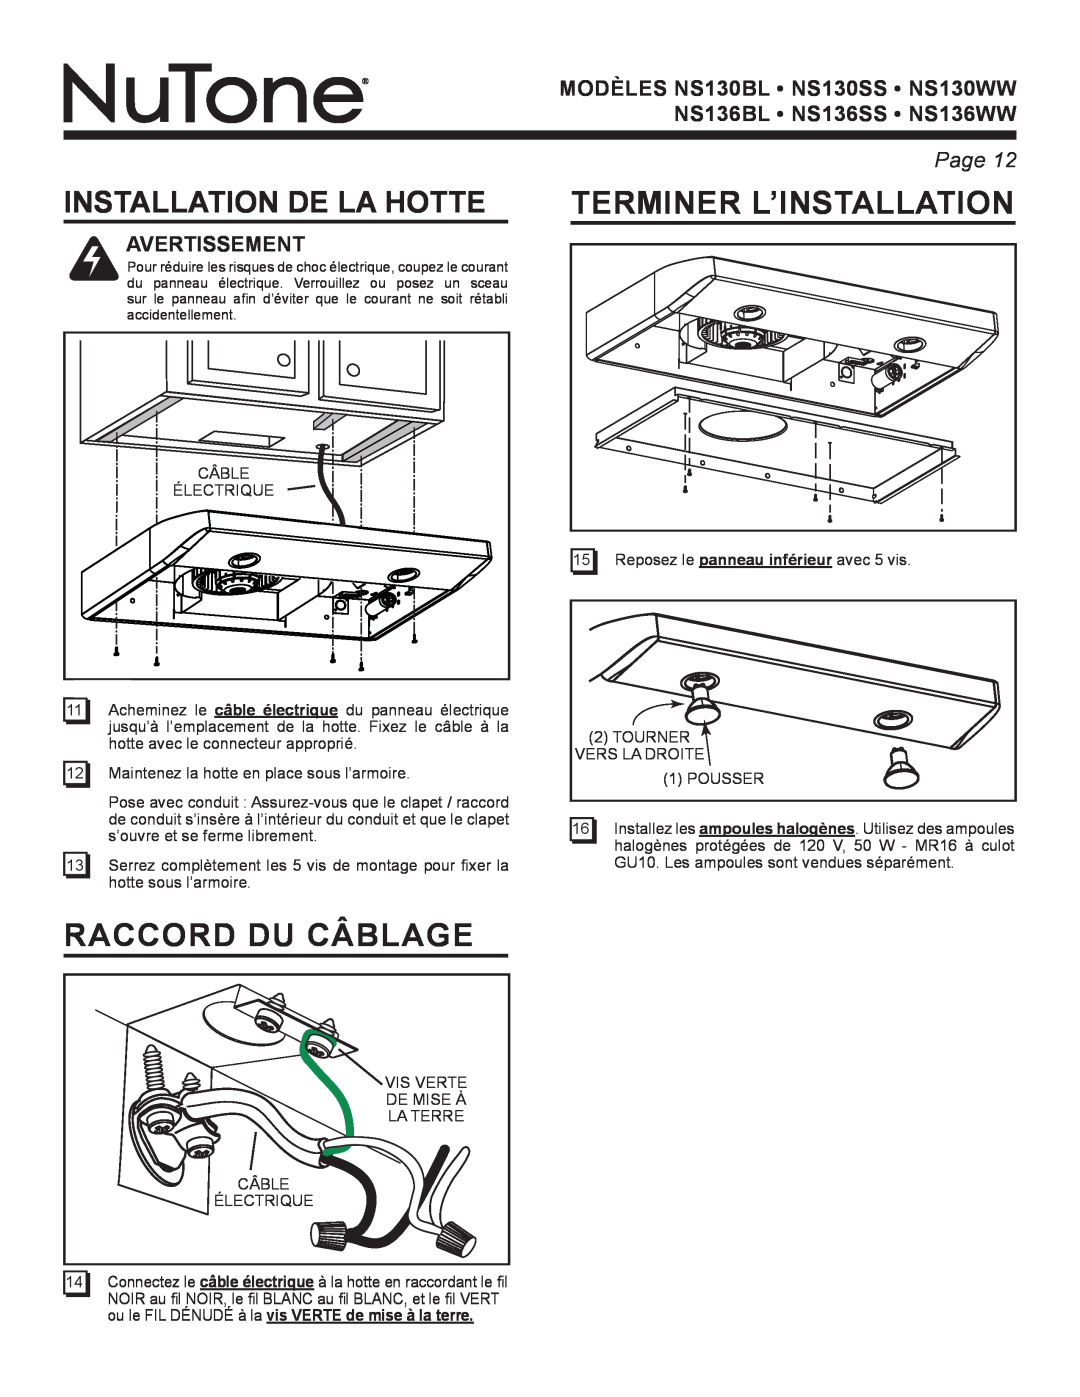 NuTone NS Series manual Raccord Du Câblage, Terminer L’Installation, Installation De La Hotte, Avertissement, Page 